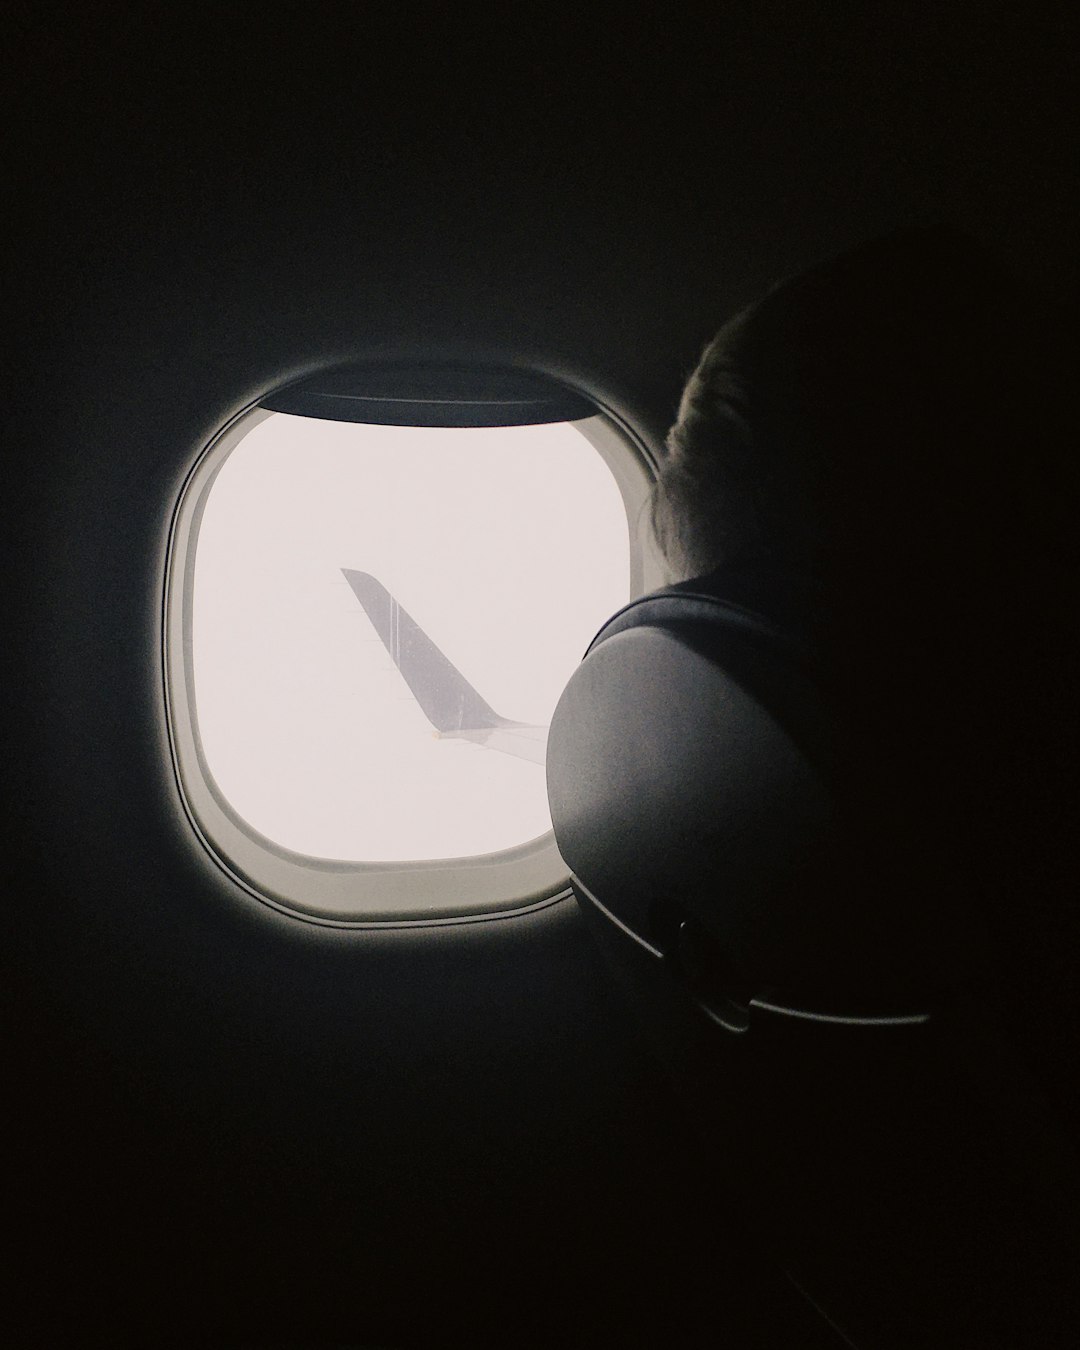 airplane window view of airplane